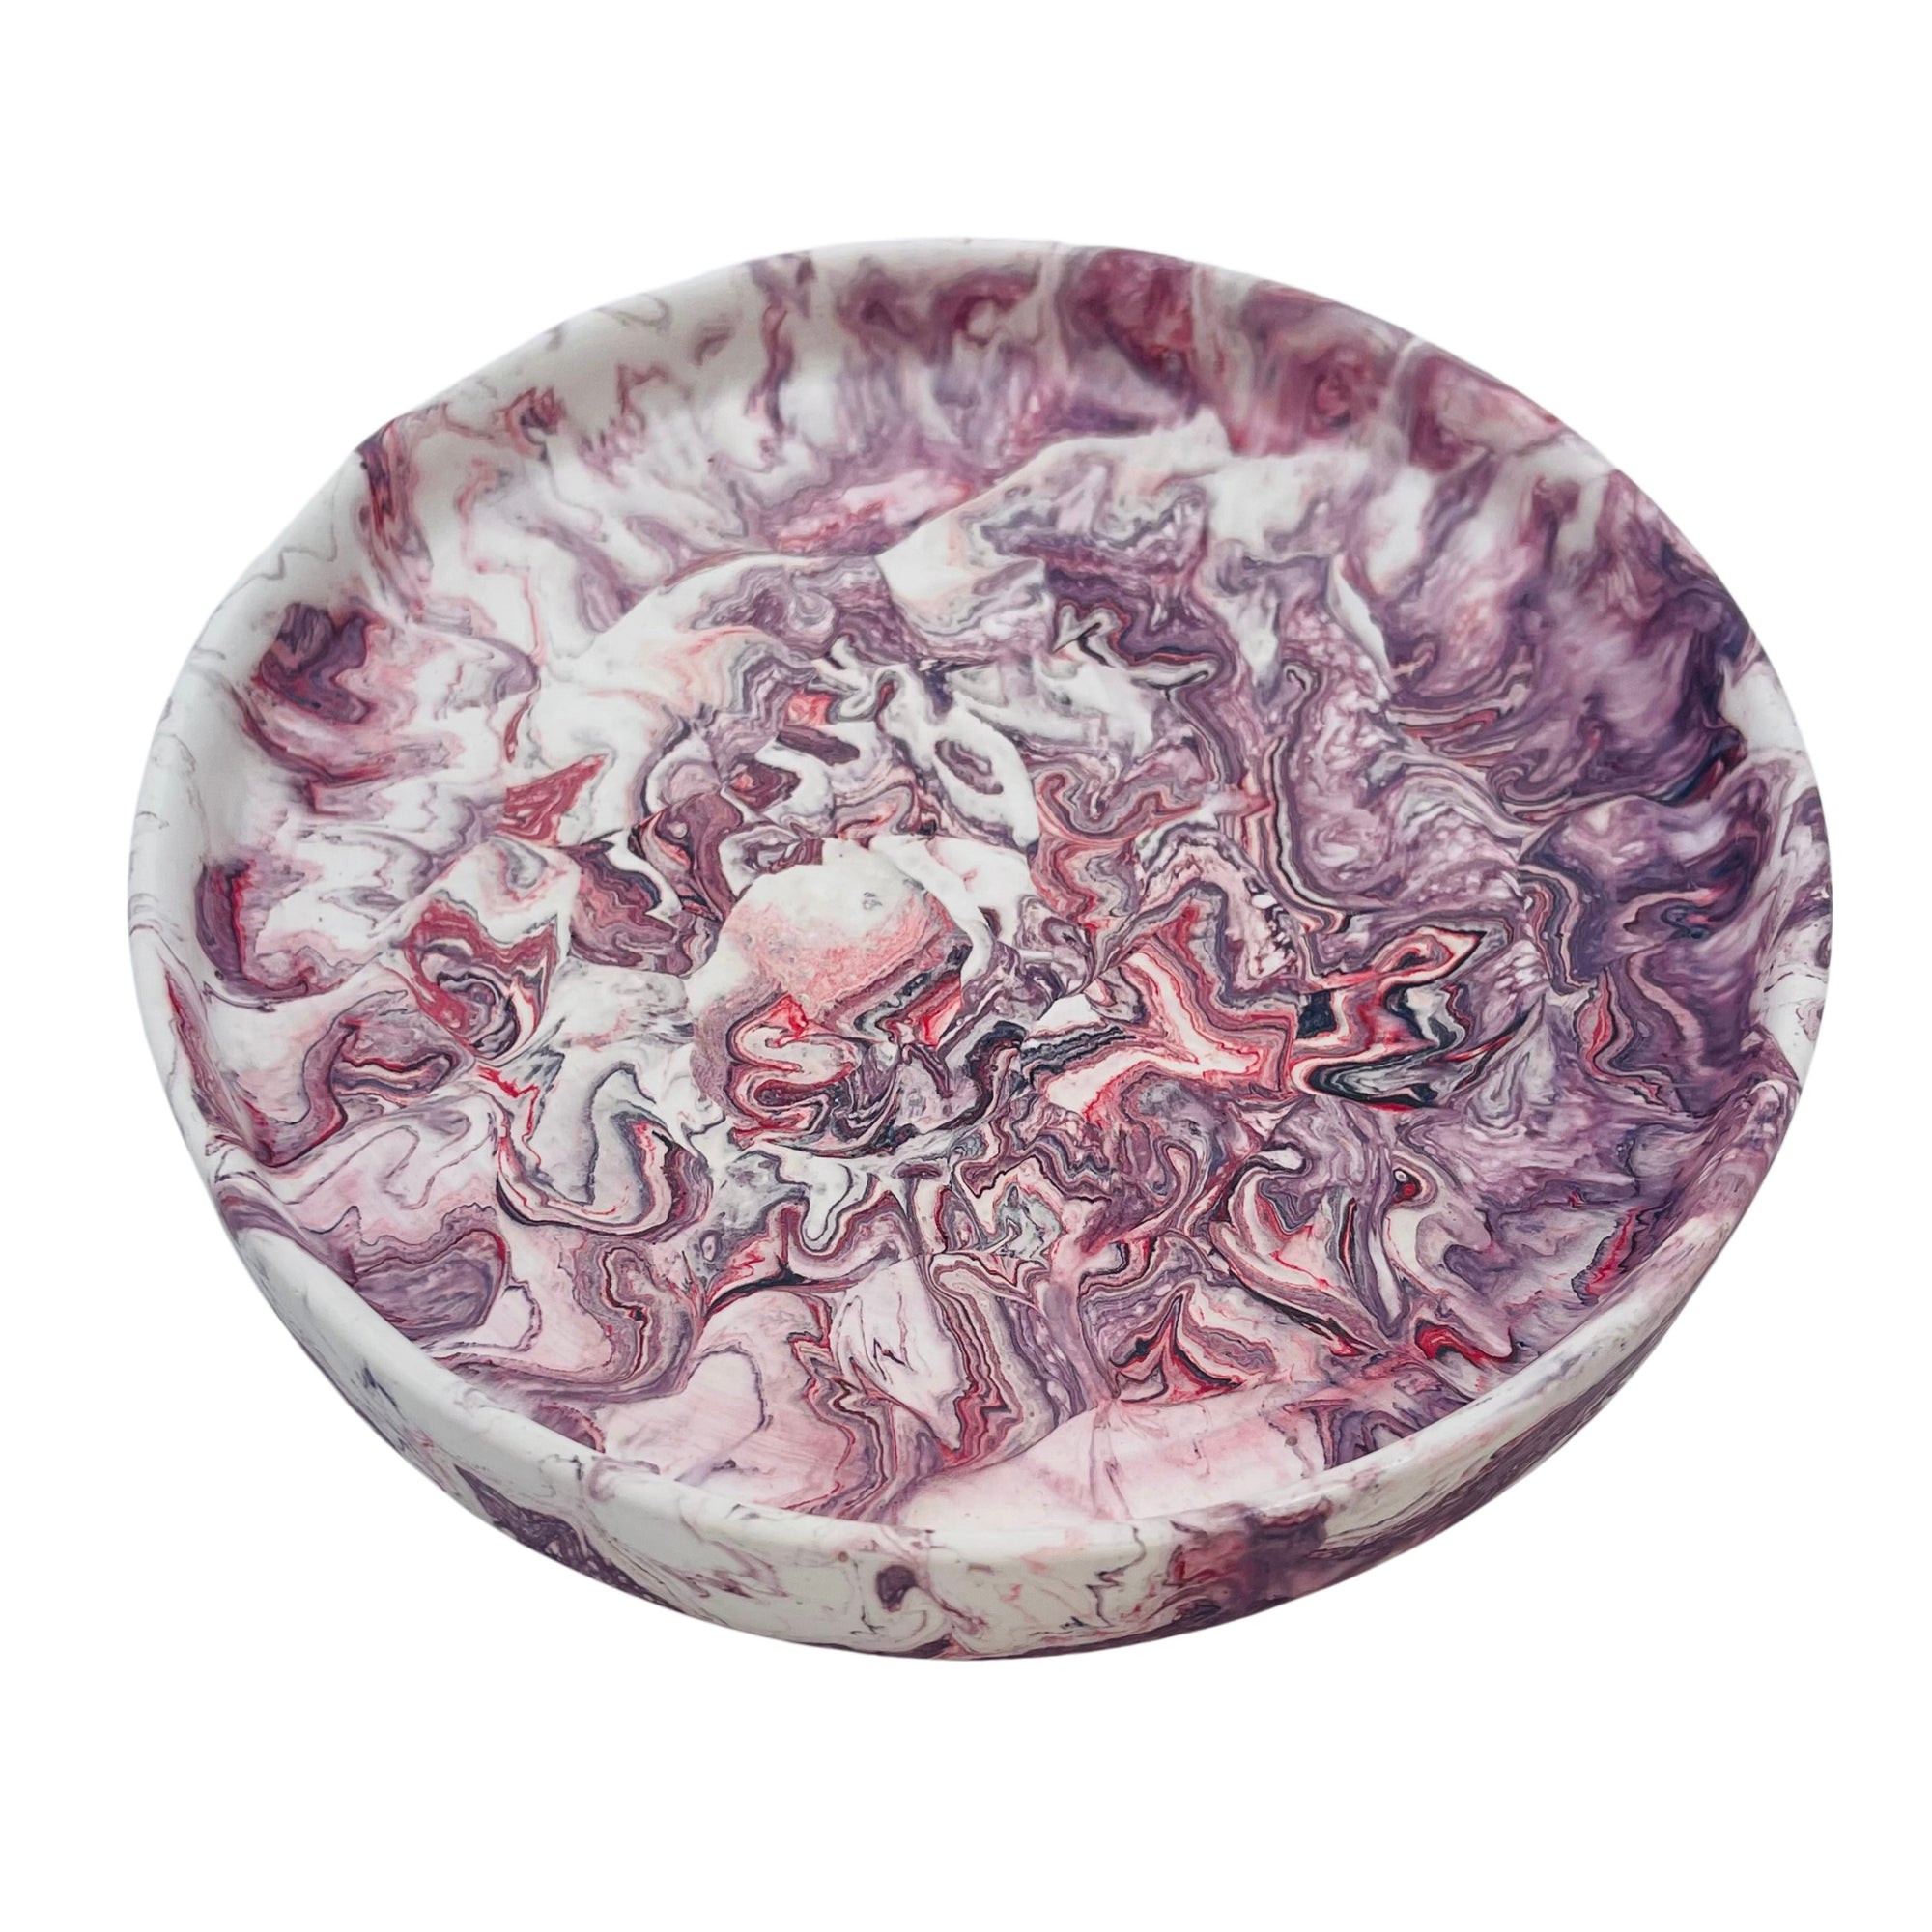 A circular Jesmonite trinket tray measuring 15.4cm in diameter marbled with aubergine pigment.